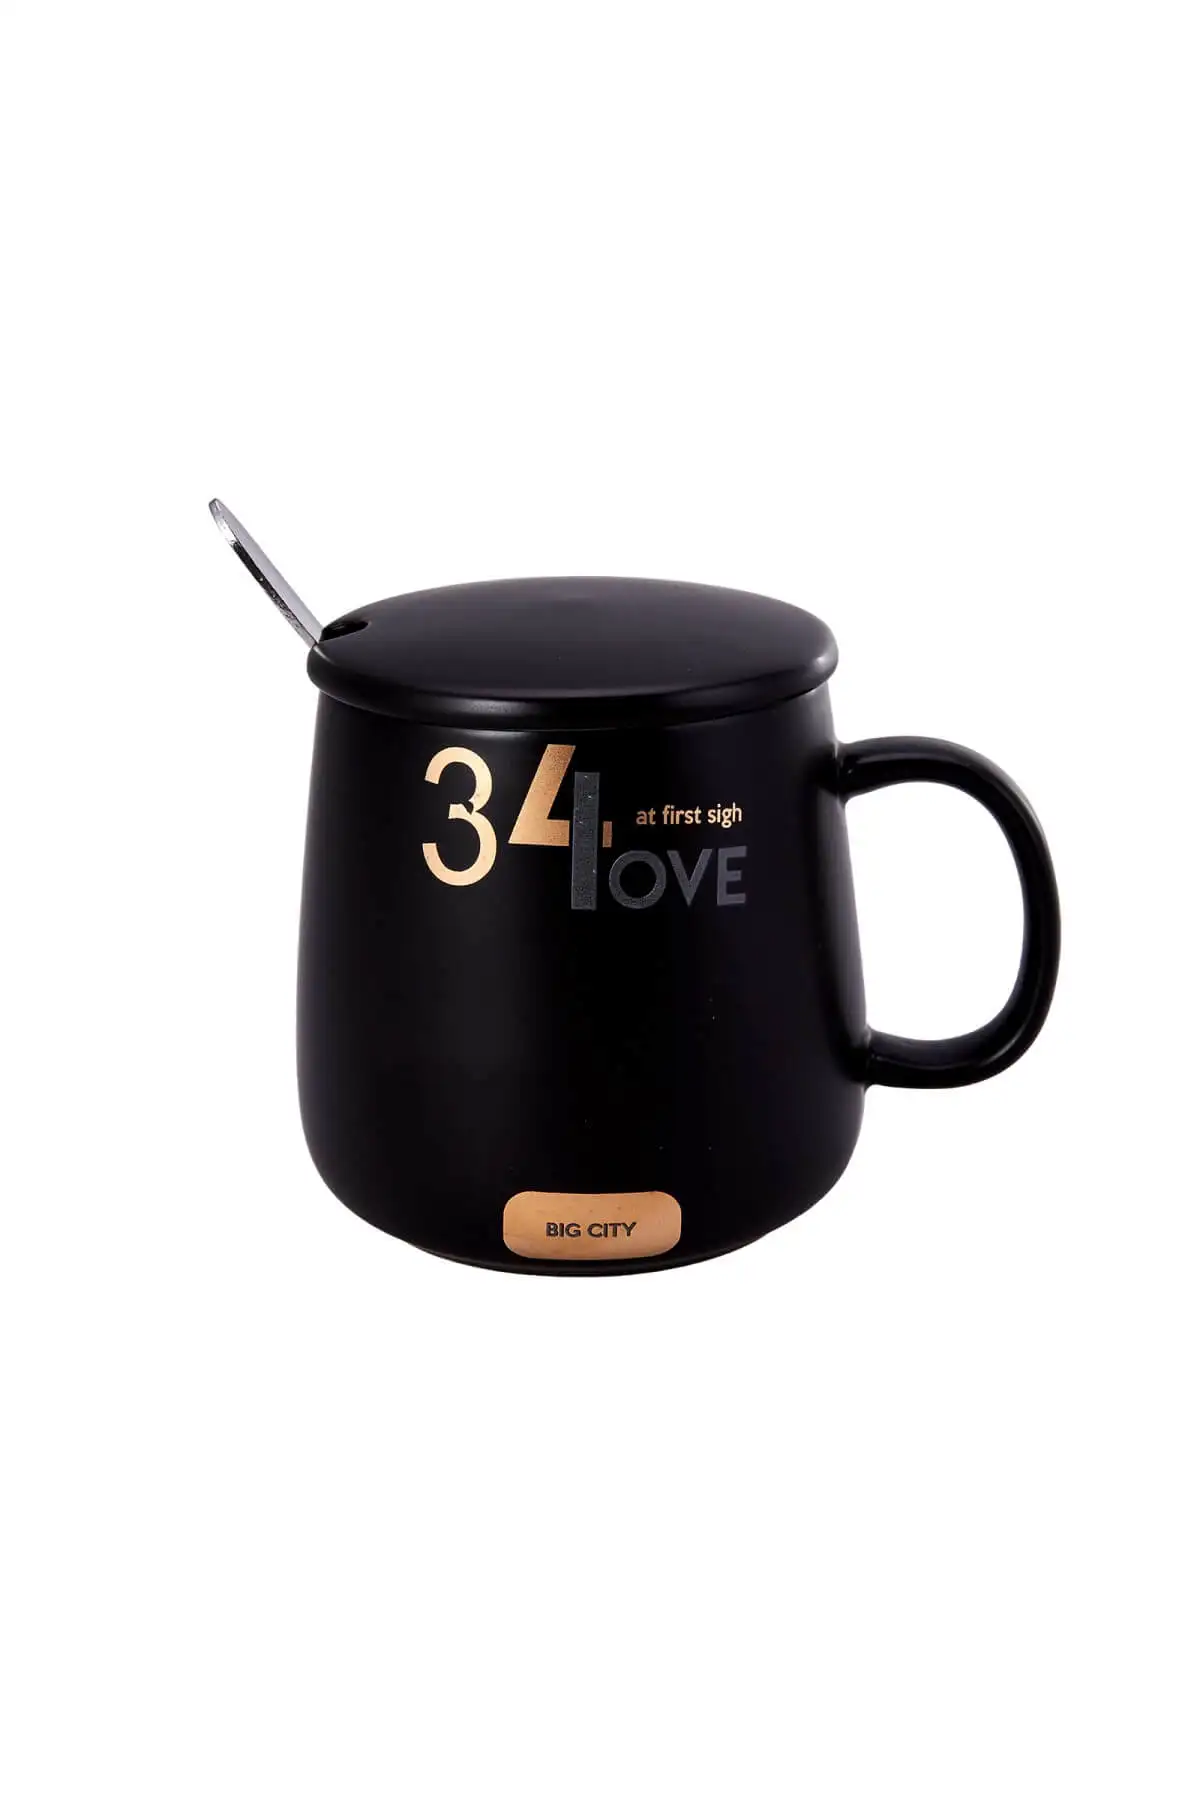 

Love Black Small Coffee Mug Expresso Glass Coffee Set Mugs And Glasses Tea Cups Hot Drinks Design Gift Items